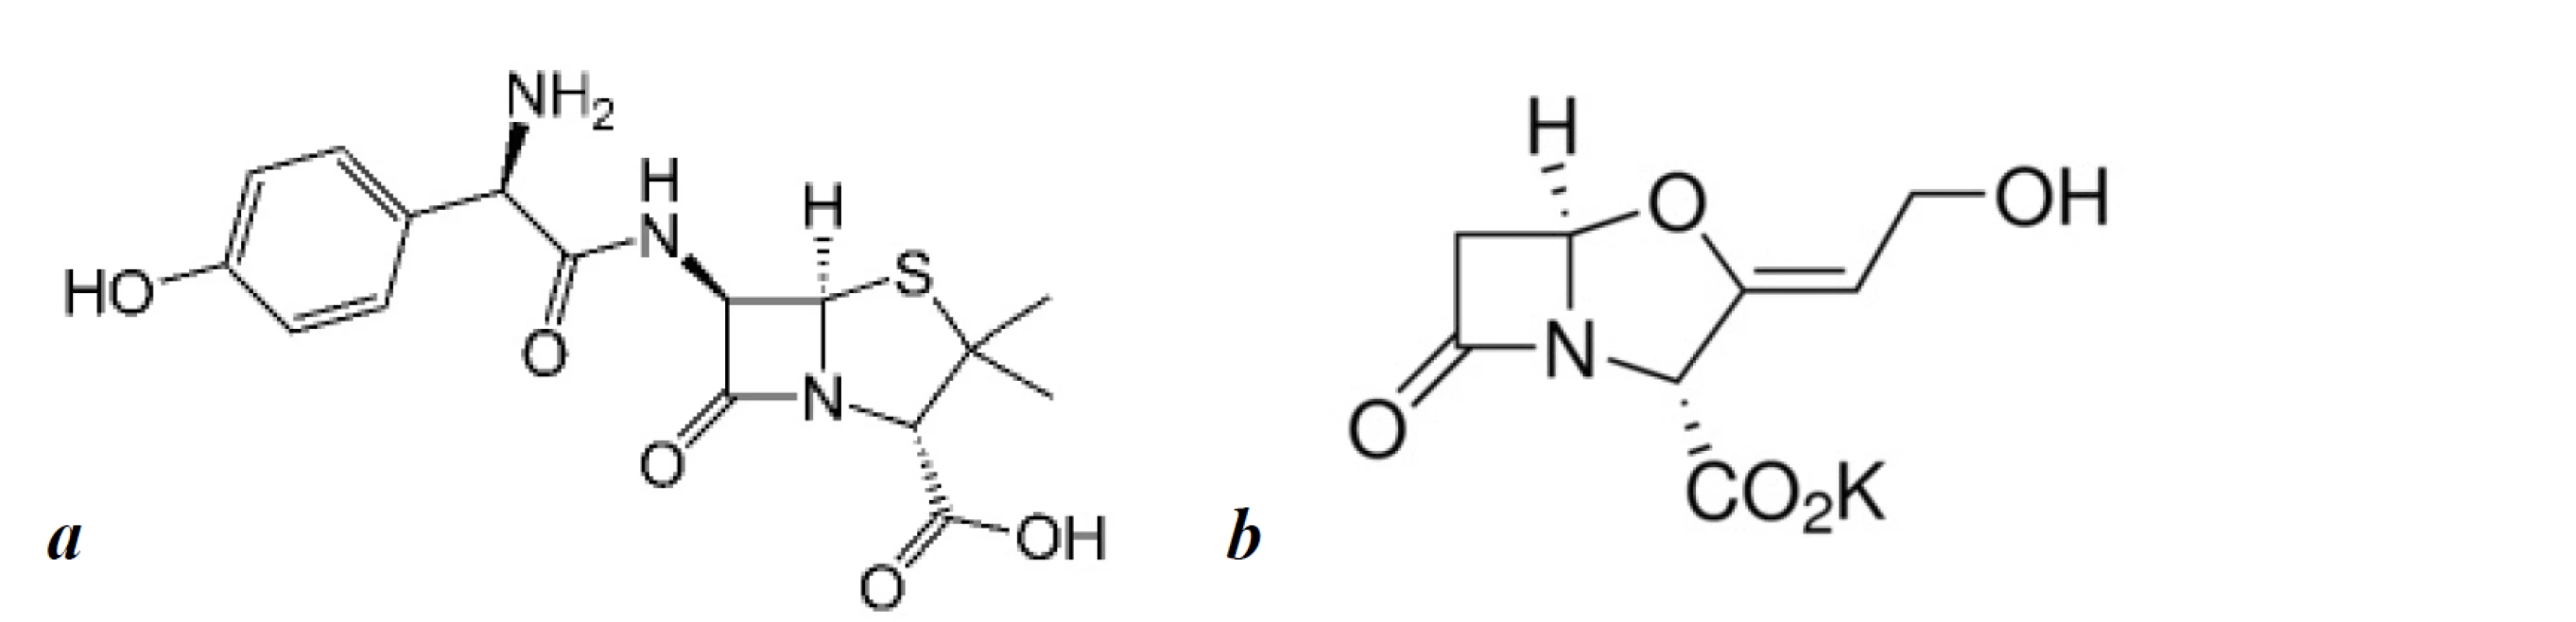 The structural formula of amoxicillin (a) and potassium clavulanate (b)